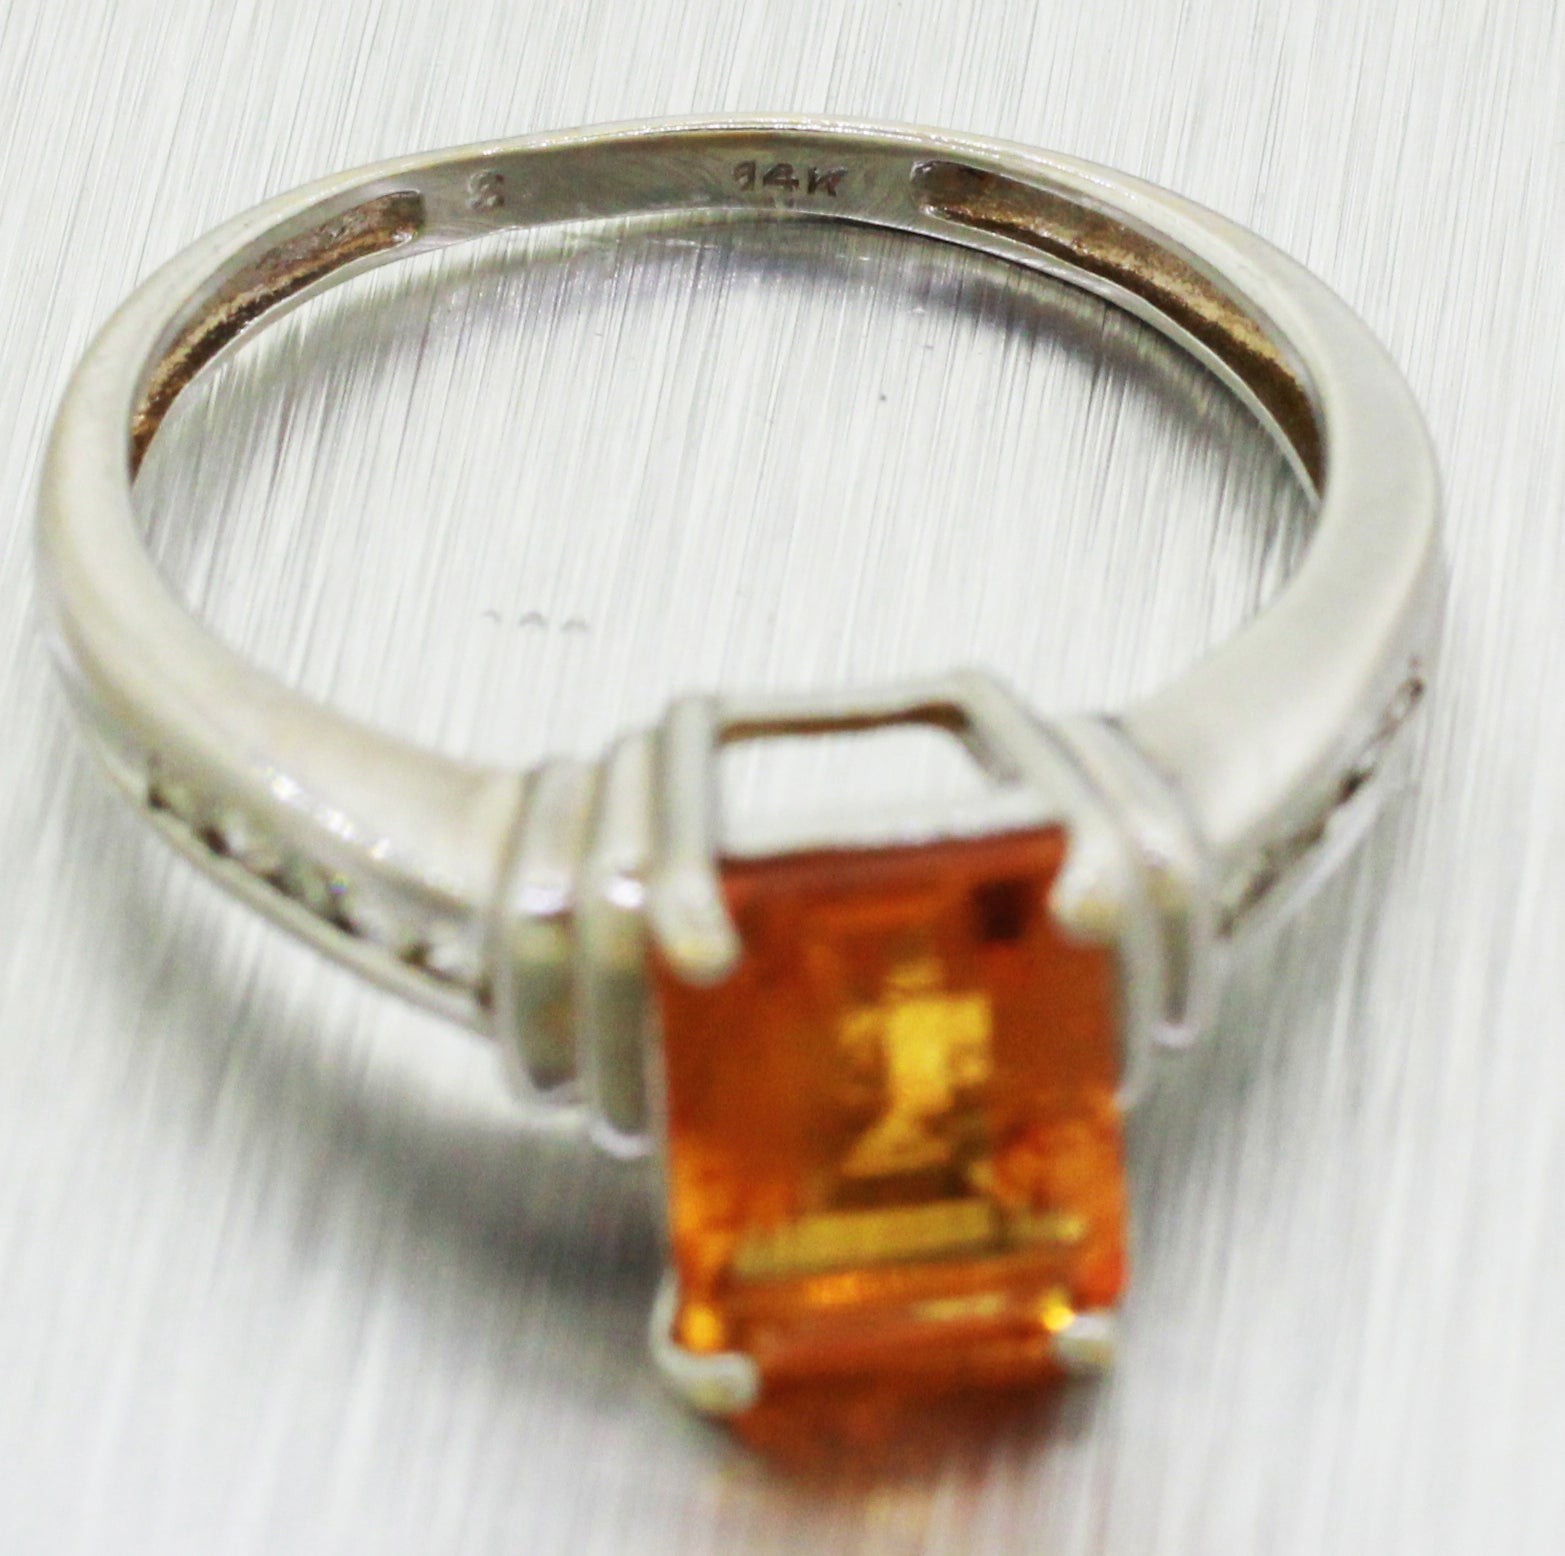 Vintage Estate 14k Solid White Gold 1ct Citrine & 0.10ctw Diamond Accent Ring